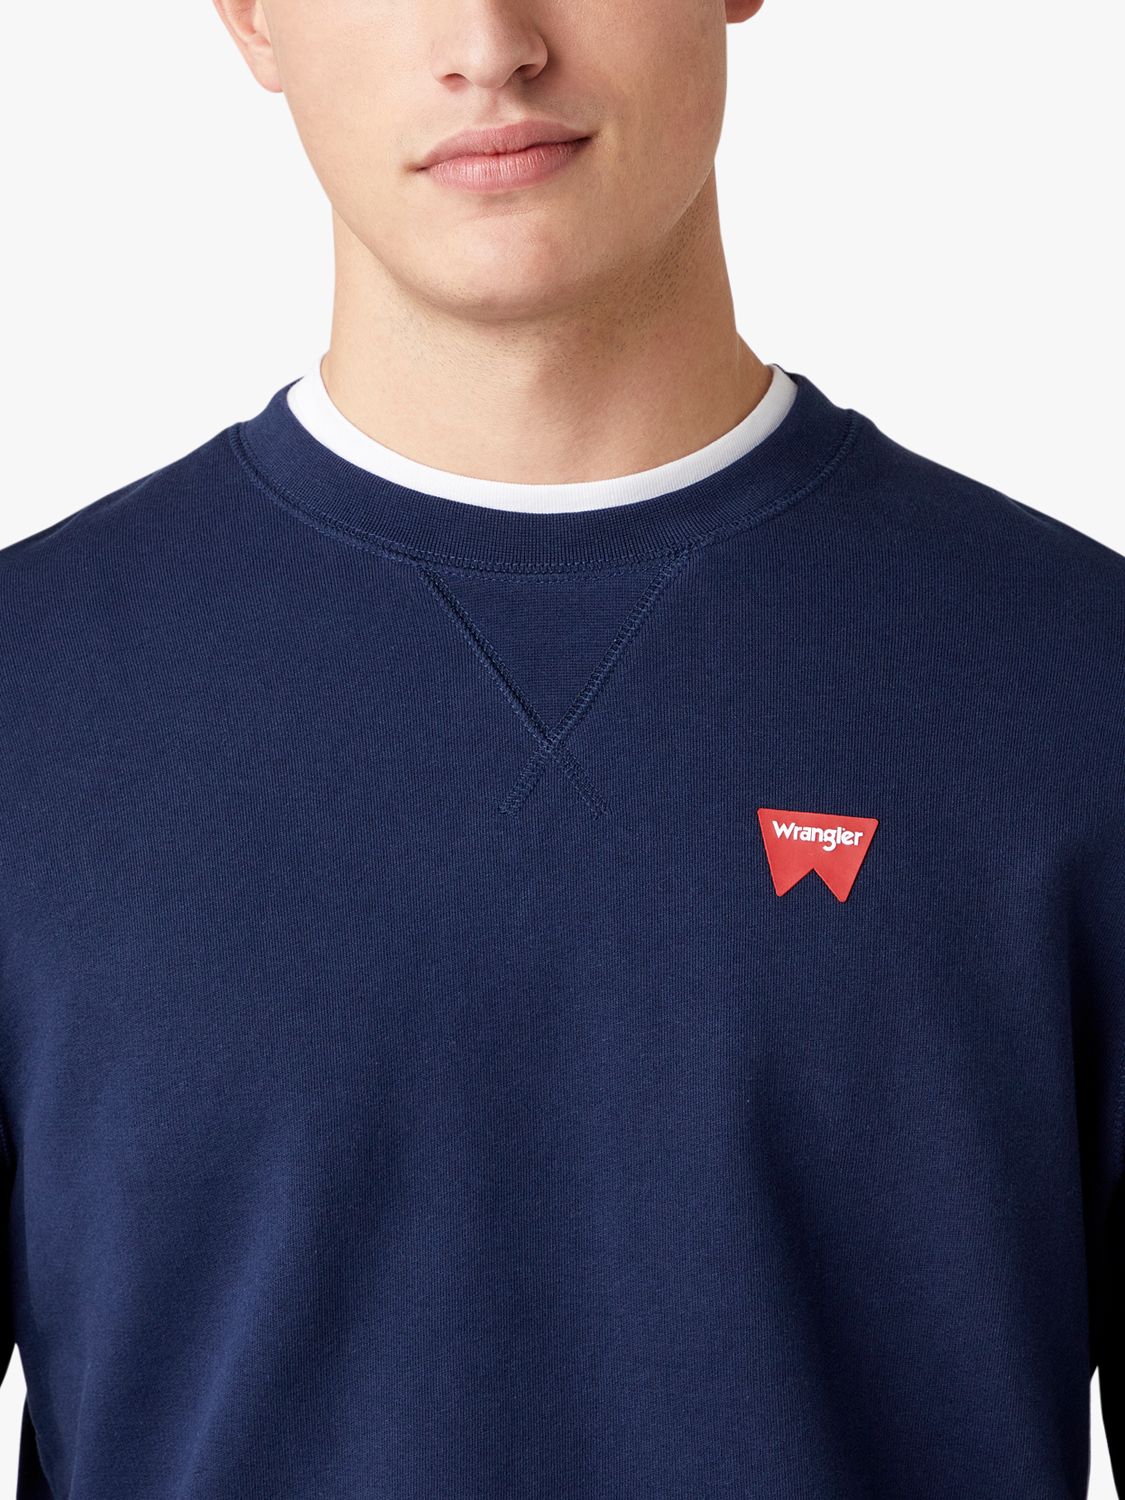 Wrangler Logo Crew Sweatshirt, Navy, S